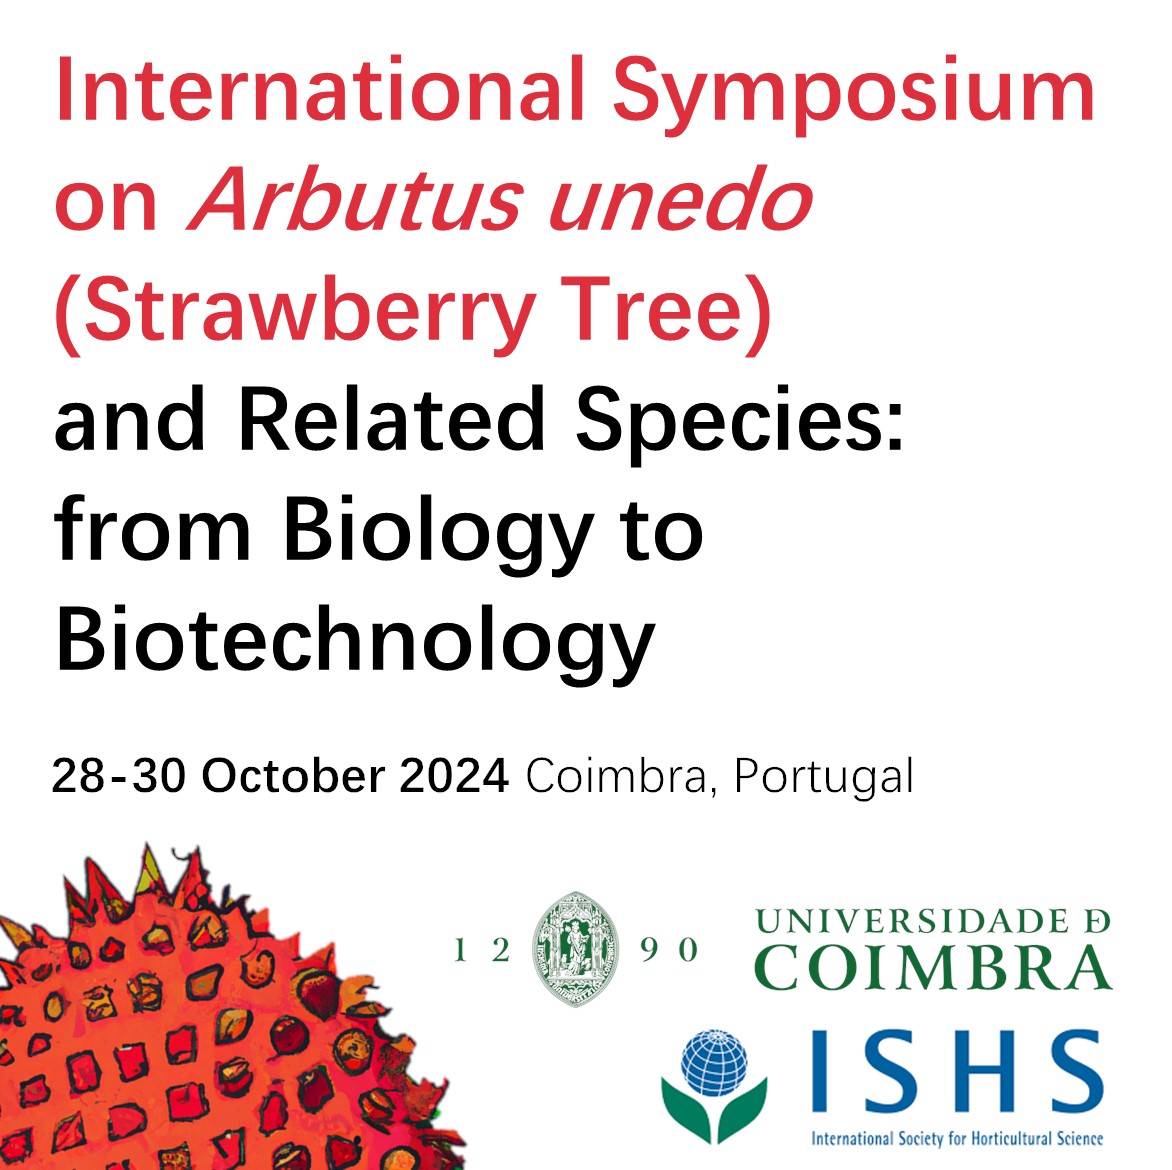 International Symposium on Arbutus unedo - General Registation